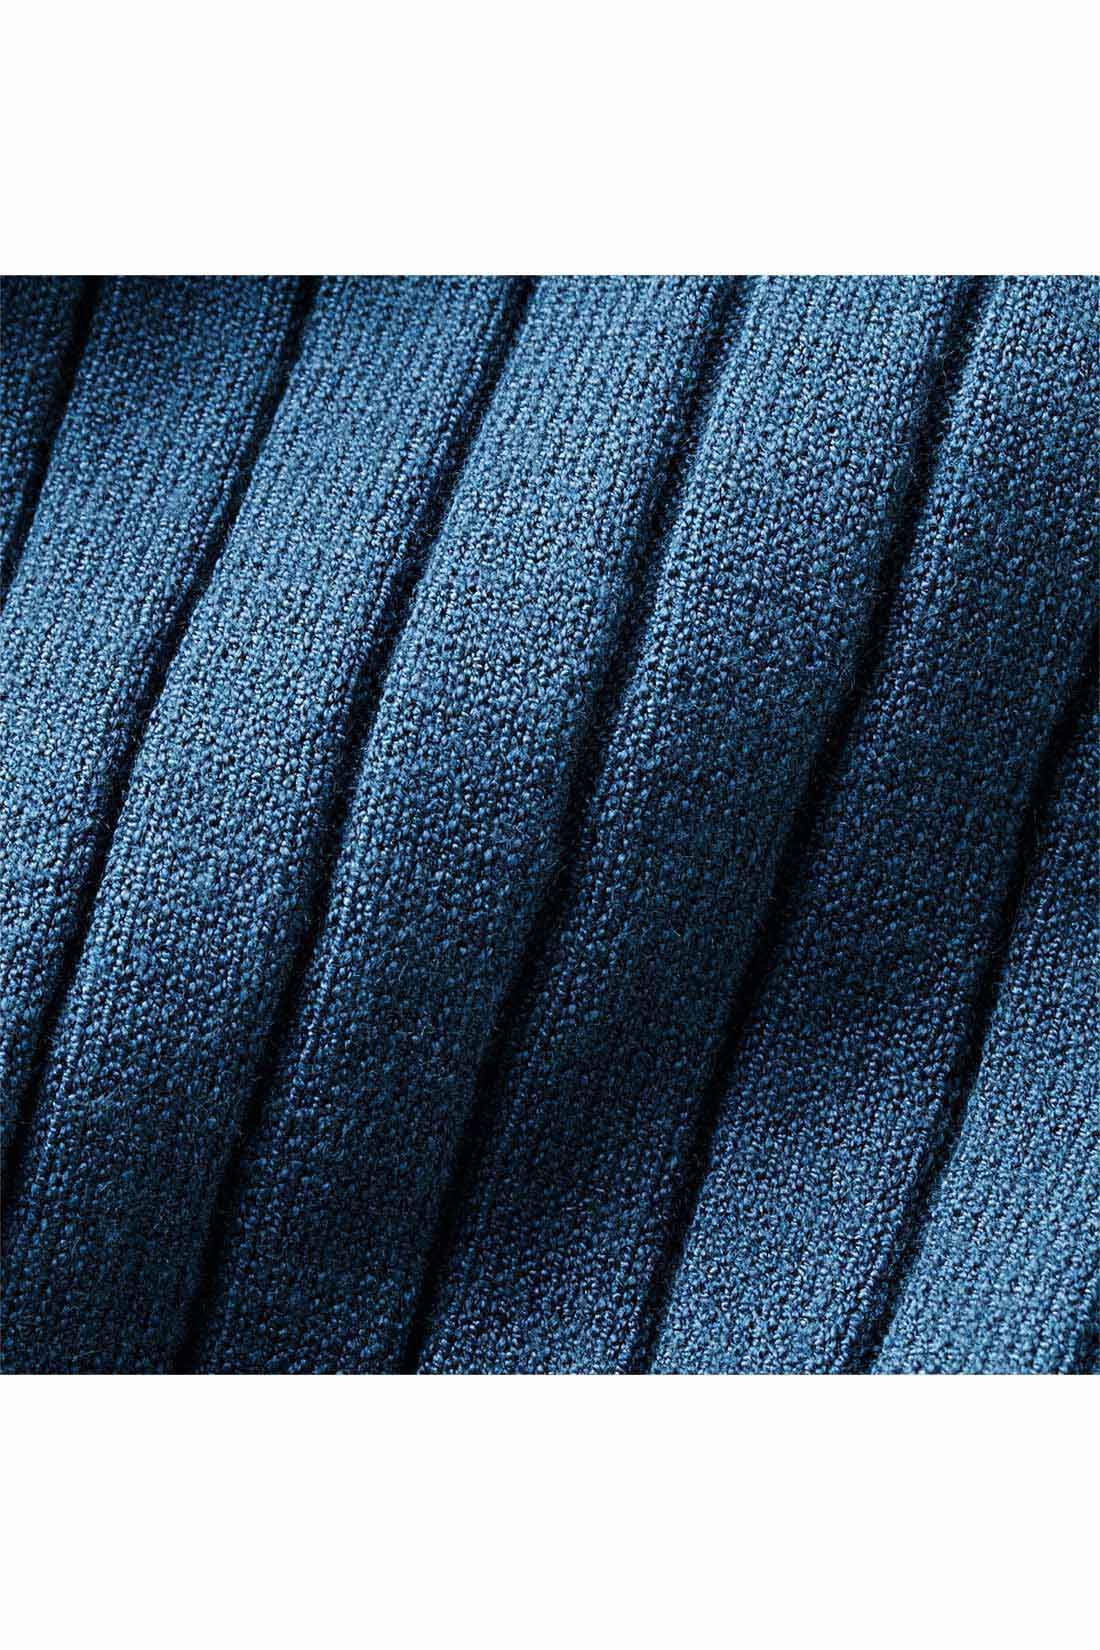 IEDIT[イディット]　キーネックデザインのワイドリブニットトップス〈ブルー〉|滑らかな肌ざわりのレーヨン混素材のワイドリブニット。